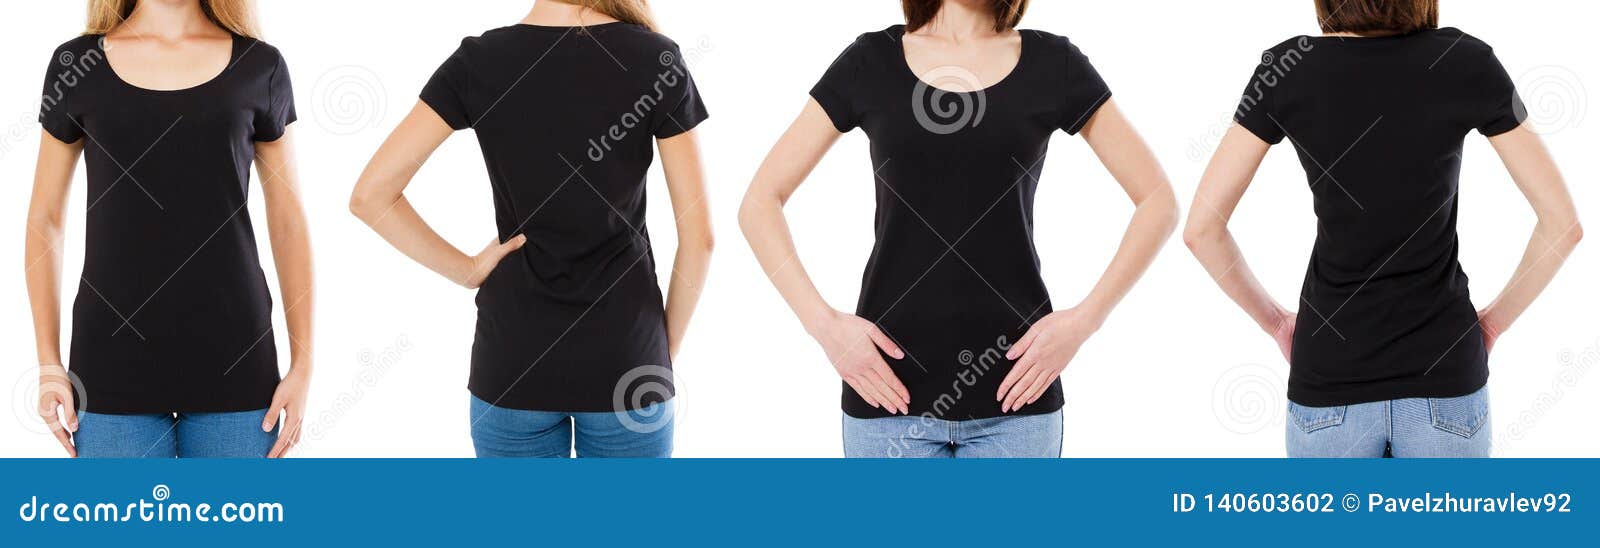 Female Tshirt Mockup Images – Browse 89,951 Stock Photos, Vectors